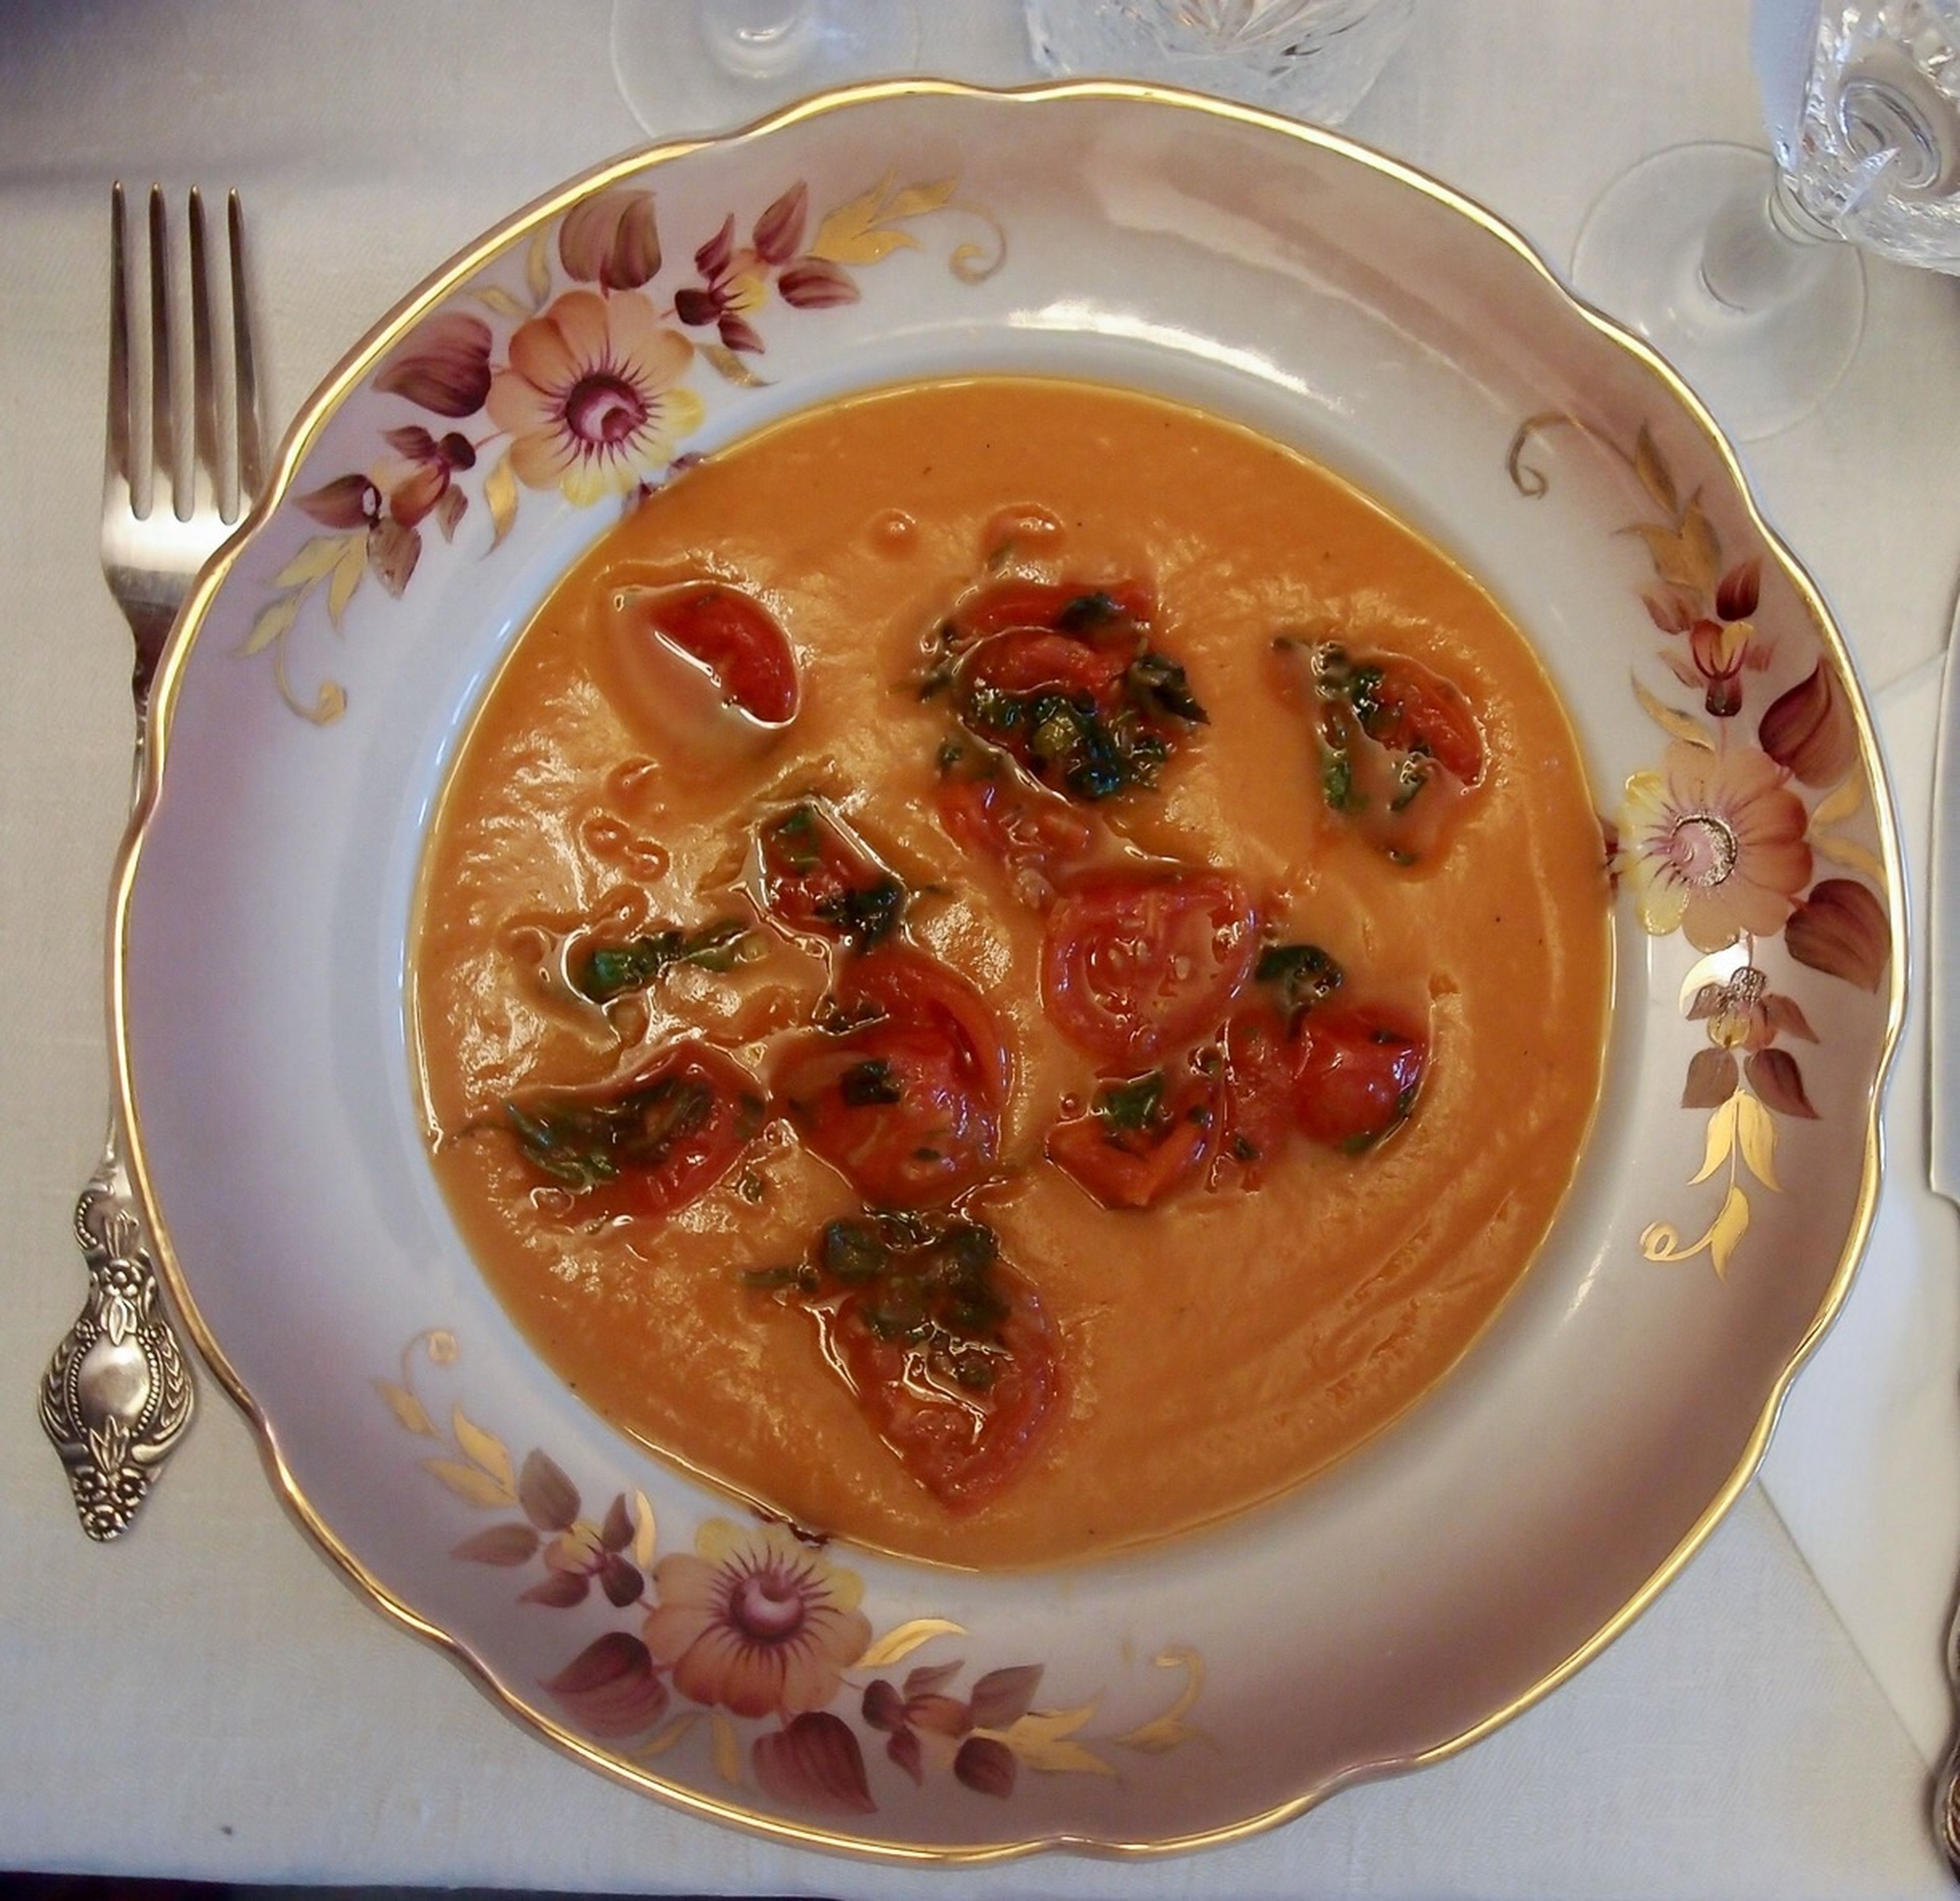 Sweet potato soup with chili tomatoes